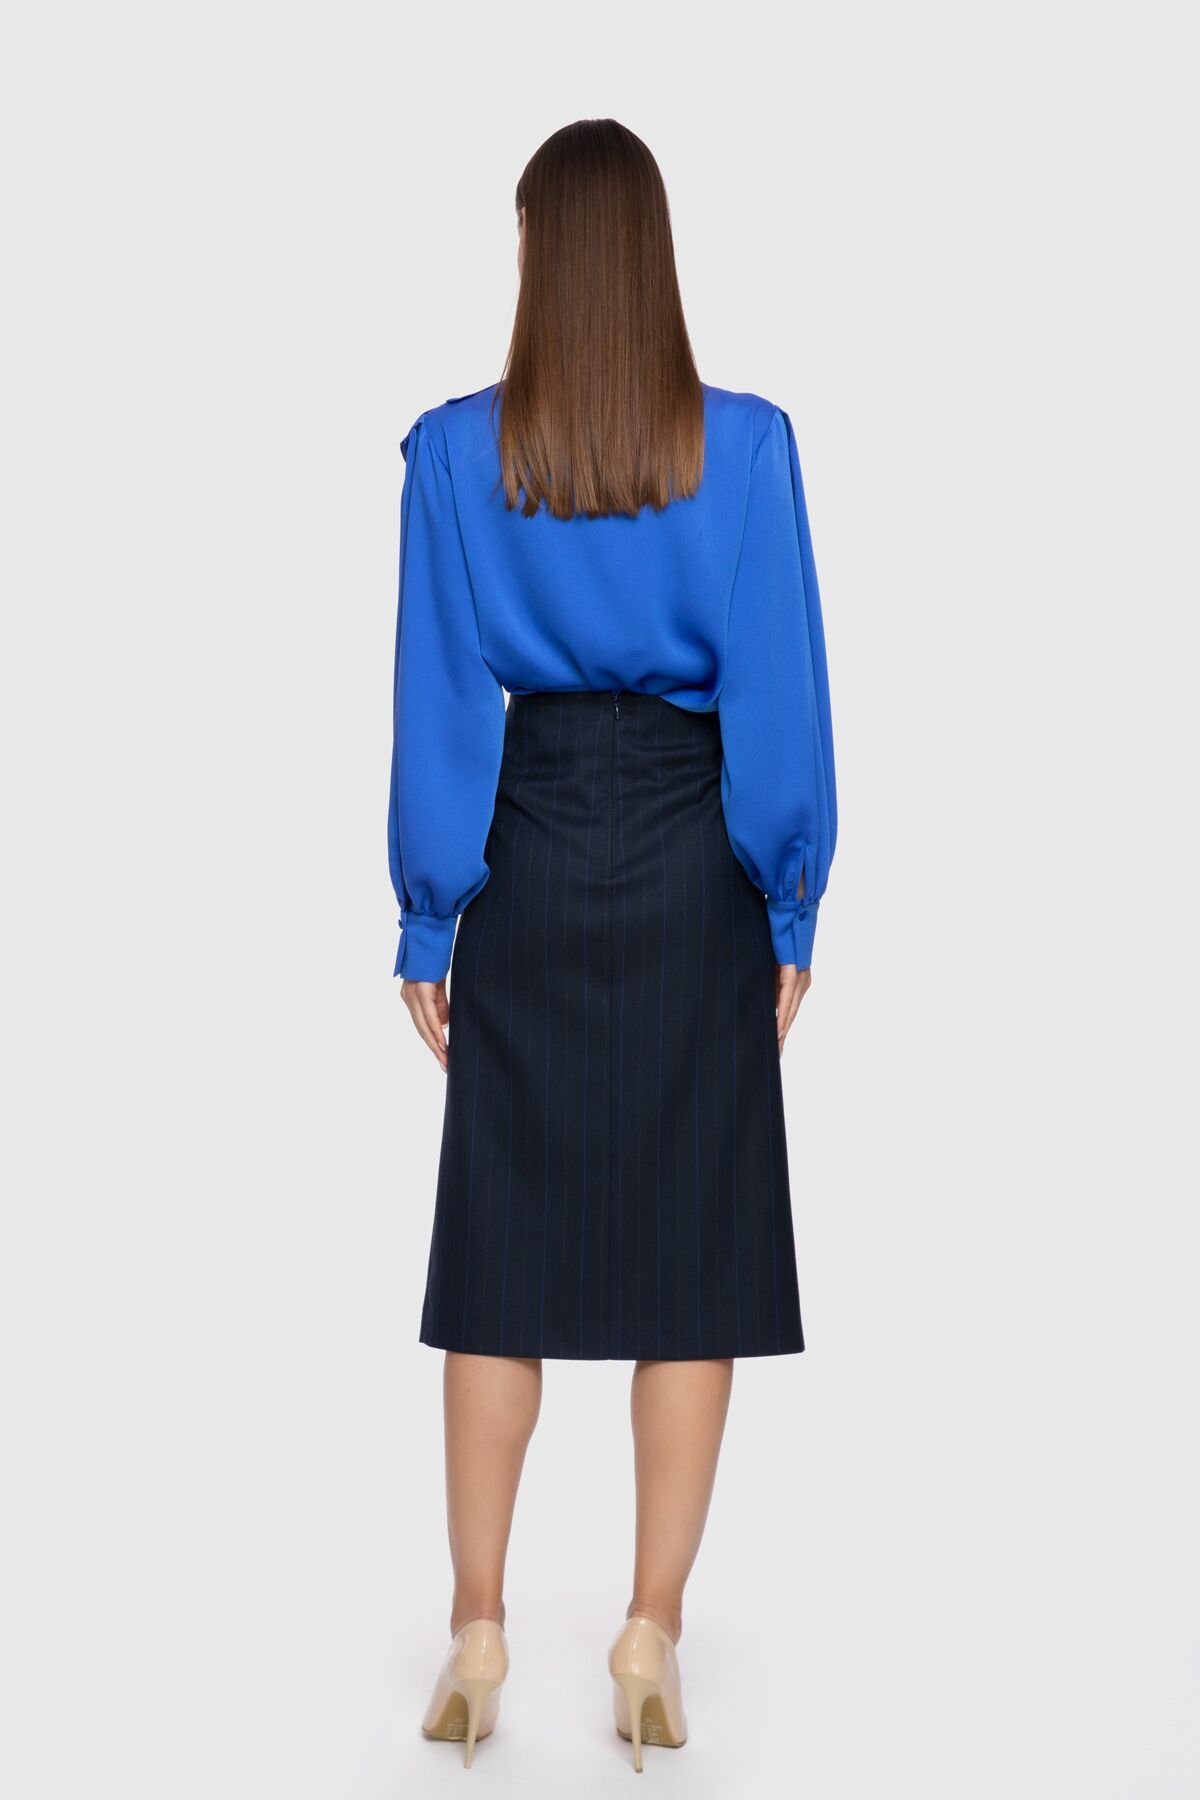 Asymmetrical Draped Detailed Navy Blue Pencil Skirt